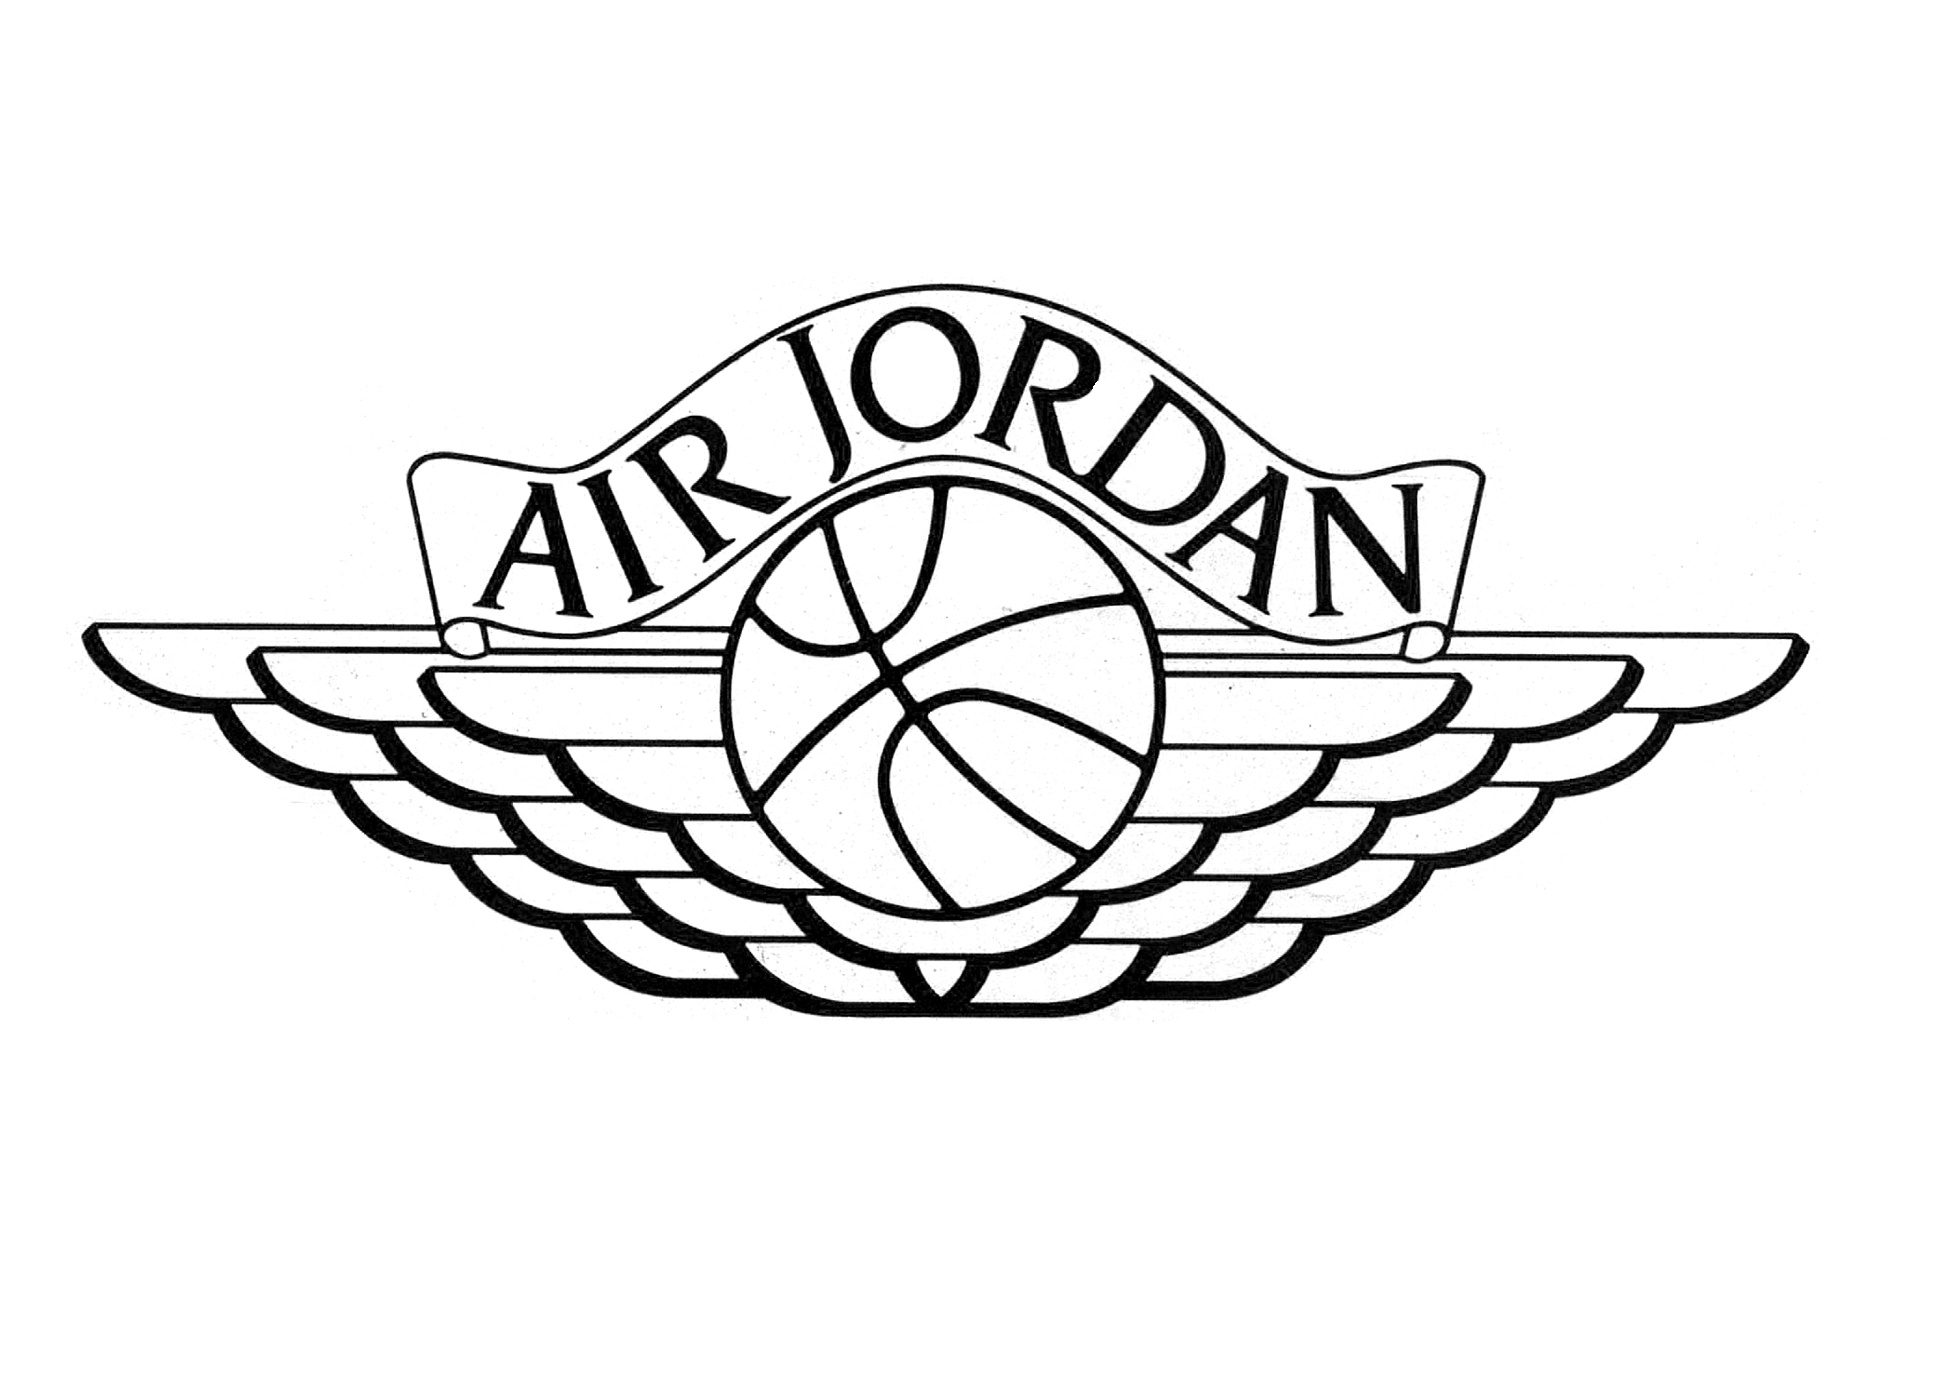 Resplandor trapo Saco Air Jordan Logo Free Download - ClipArt Best